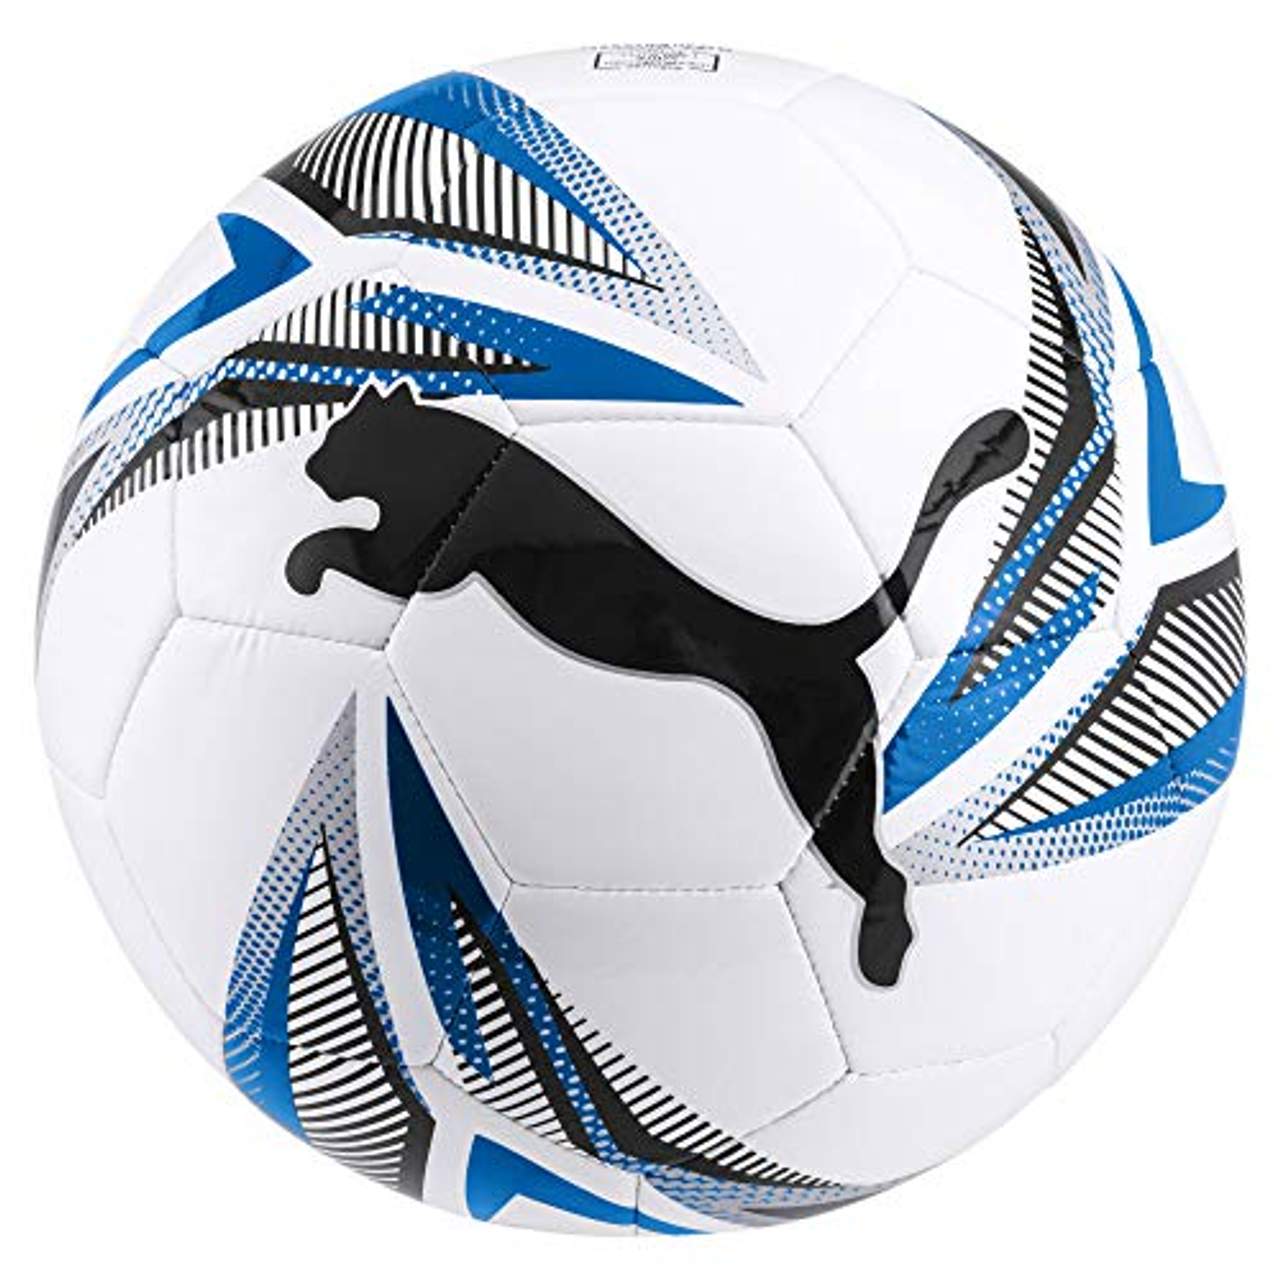 PUMA Unisex-Adult ftblPLAY Big Cat Ball Fußball